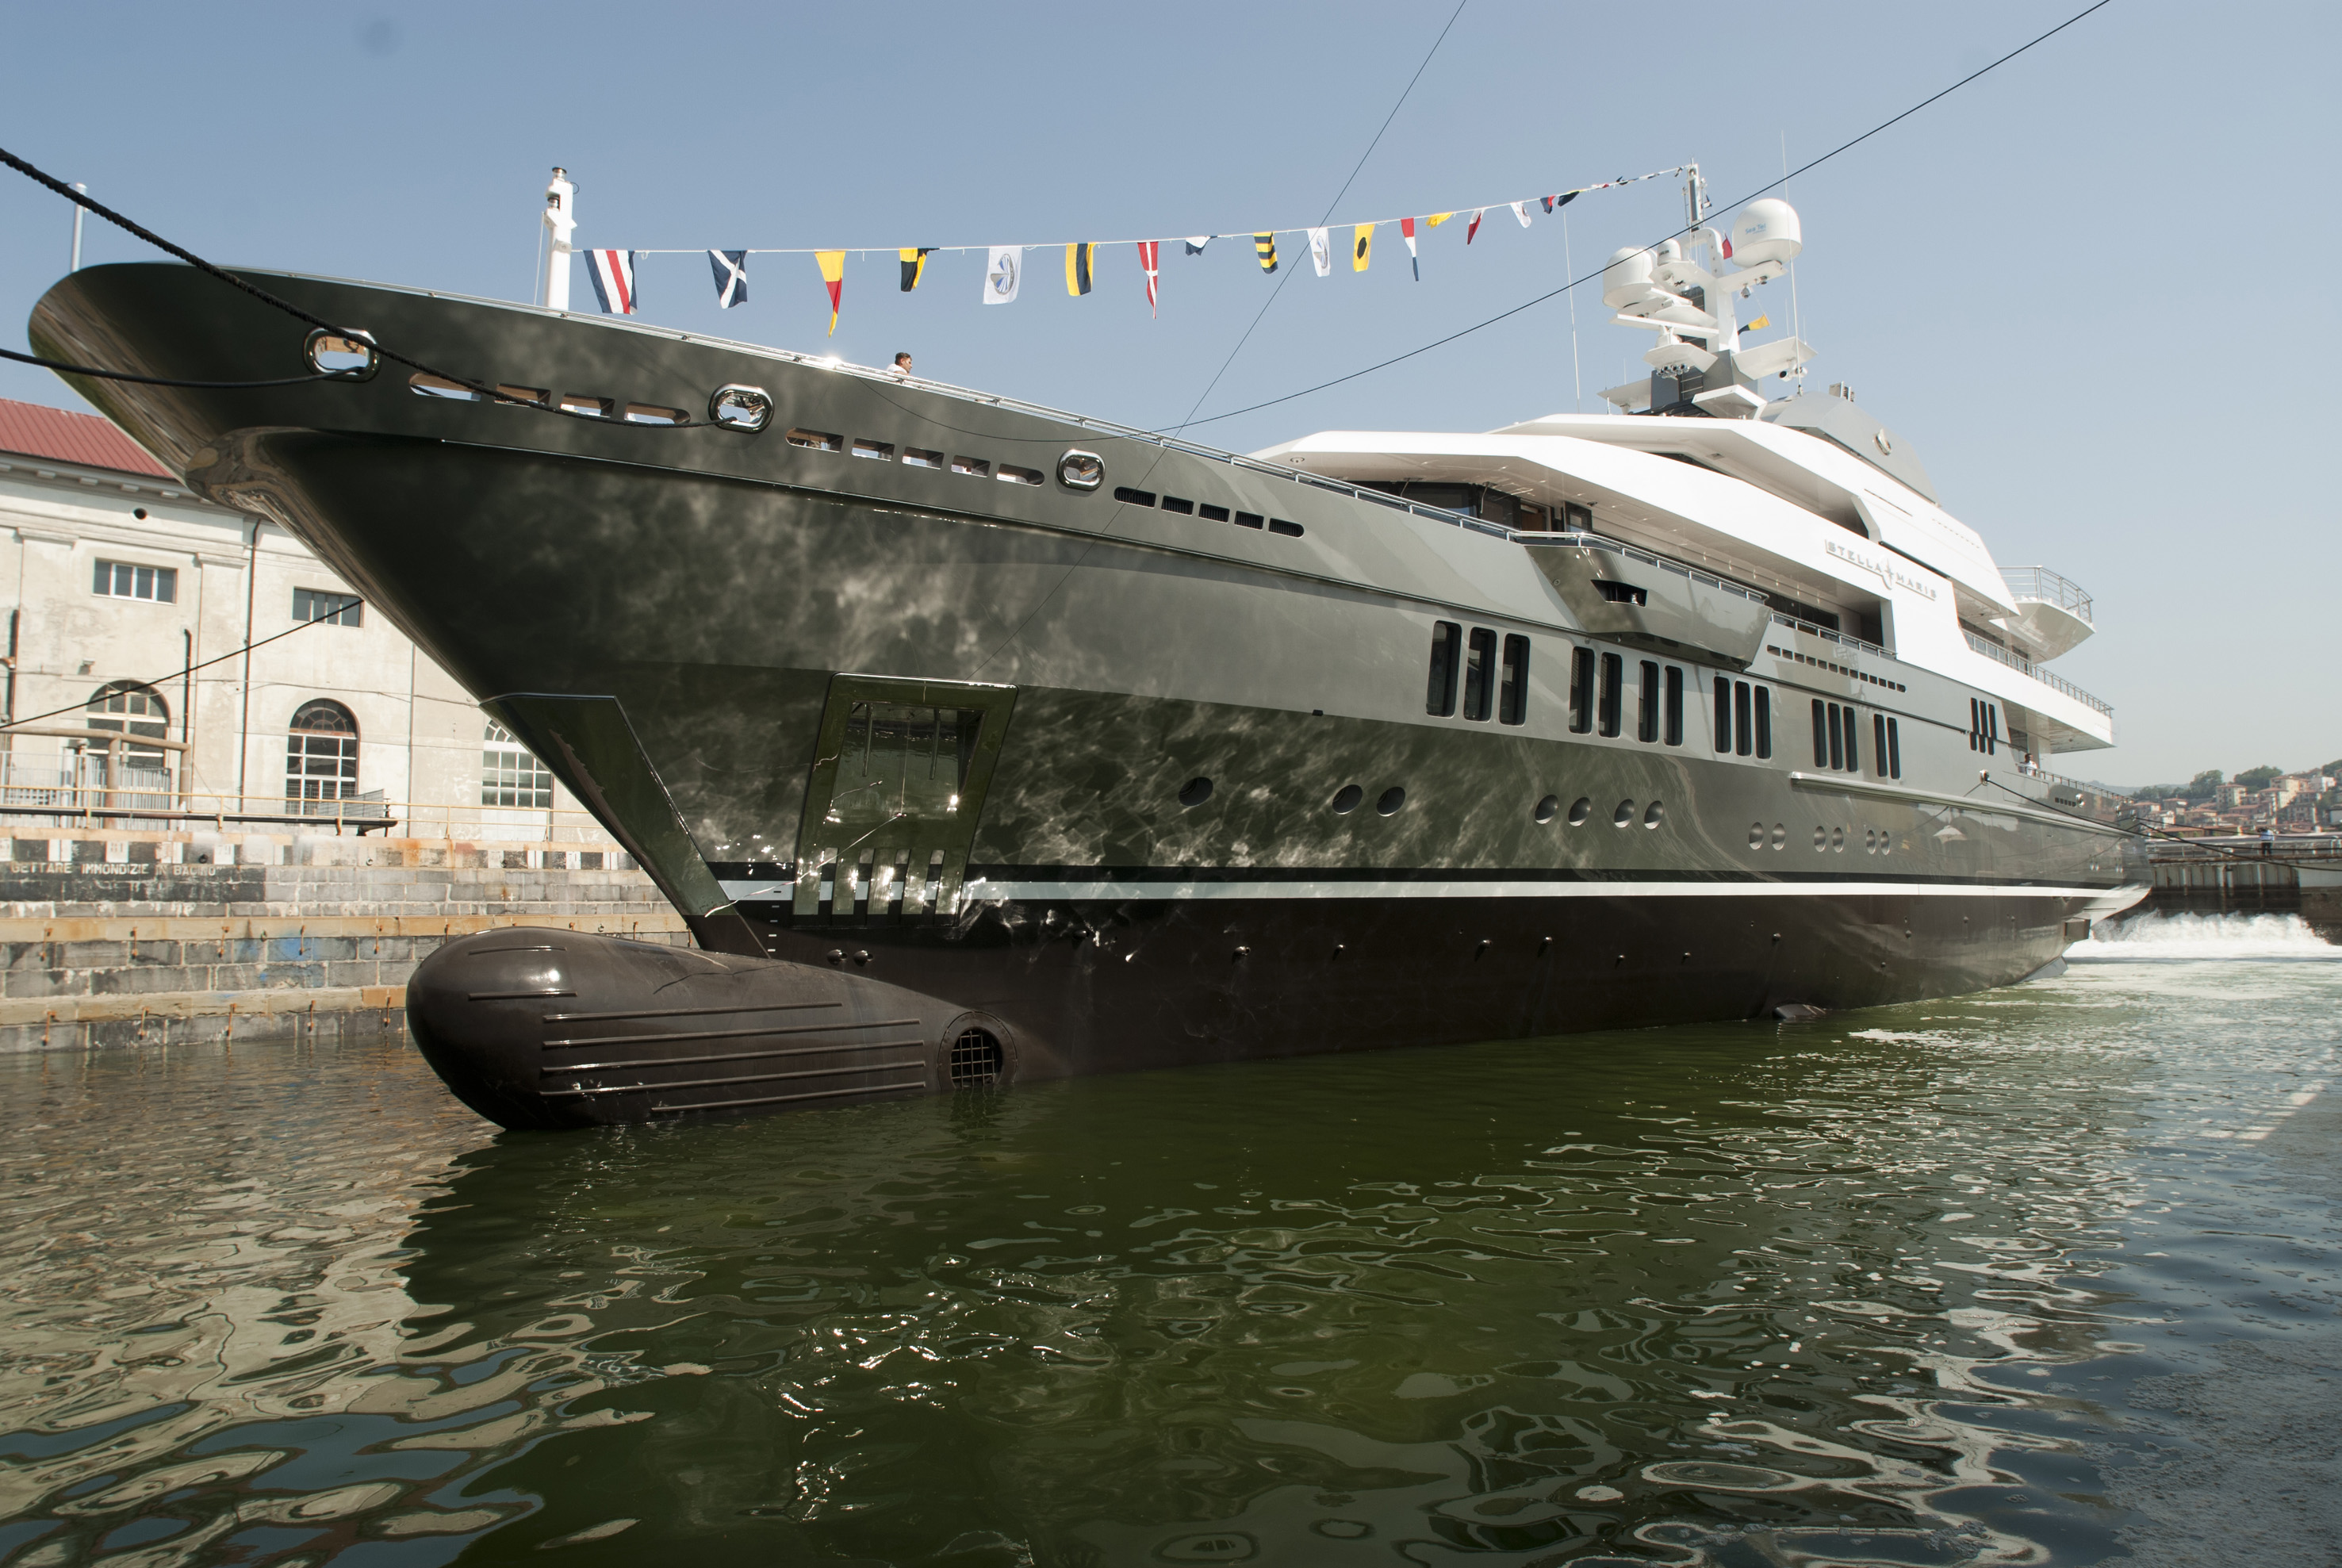 the stella maris yacht